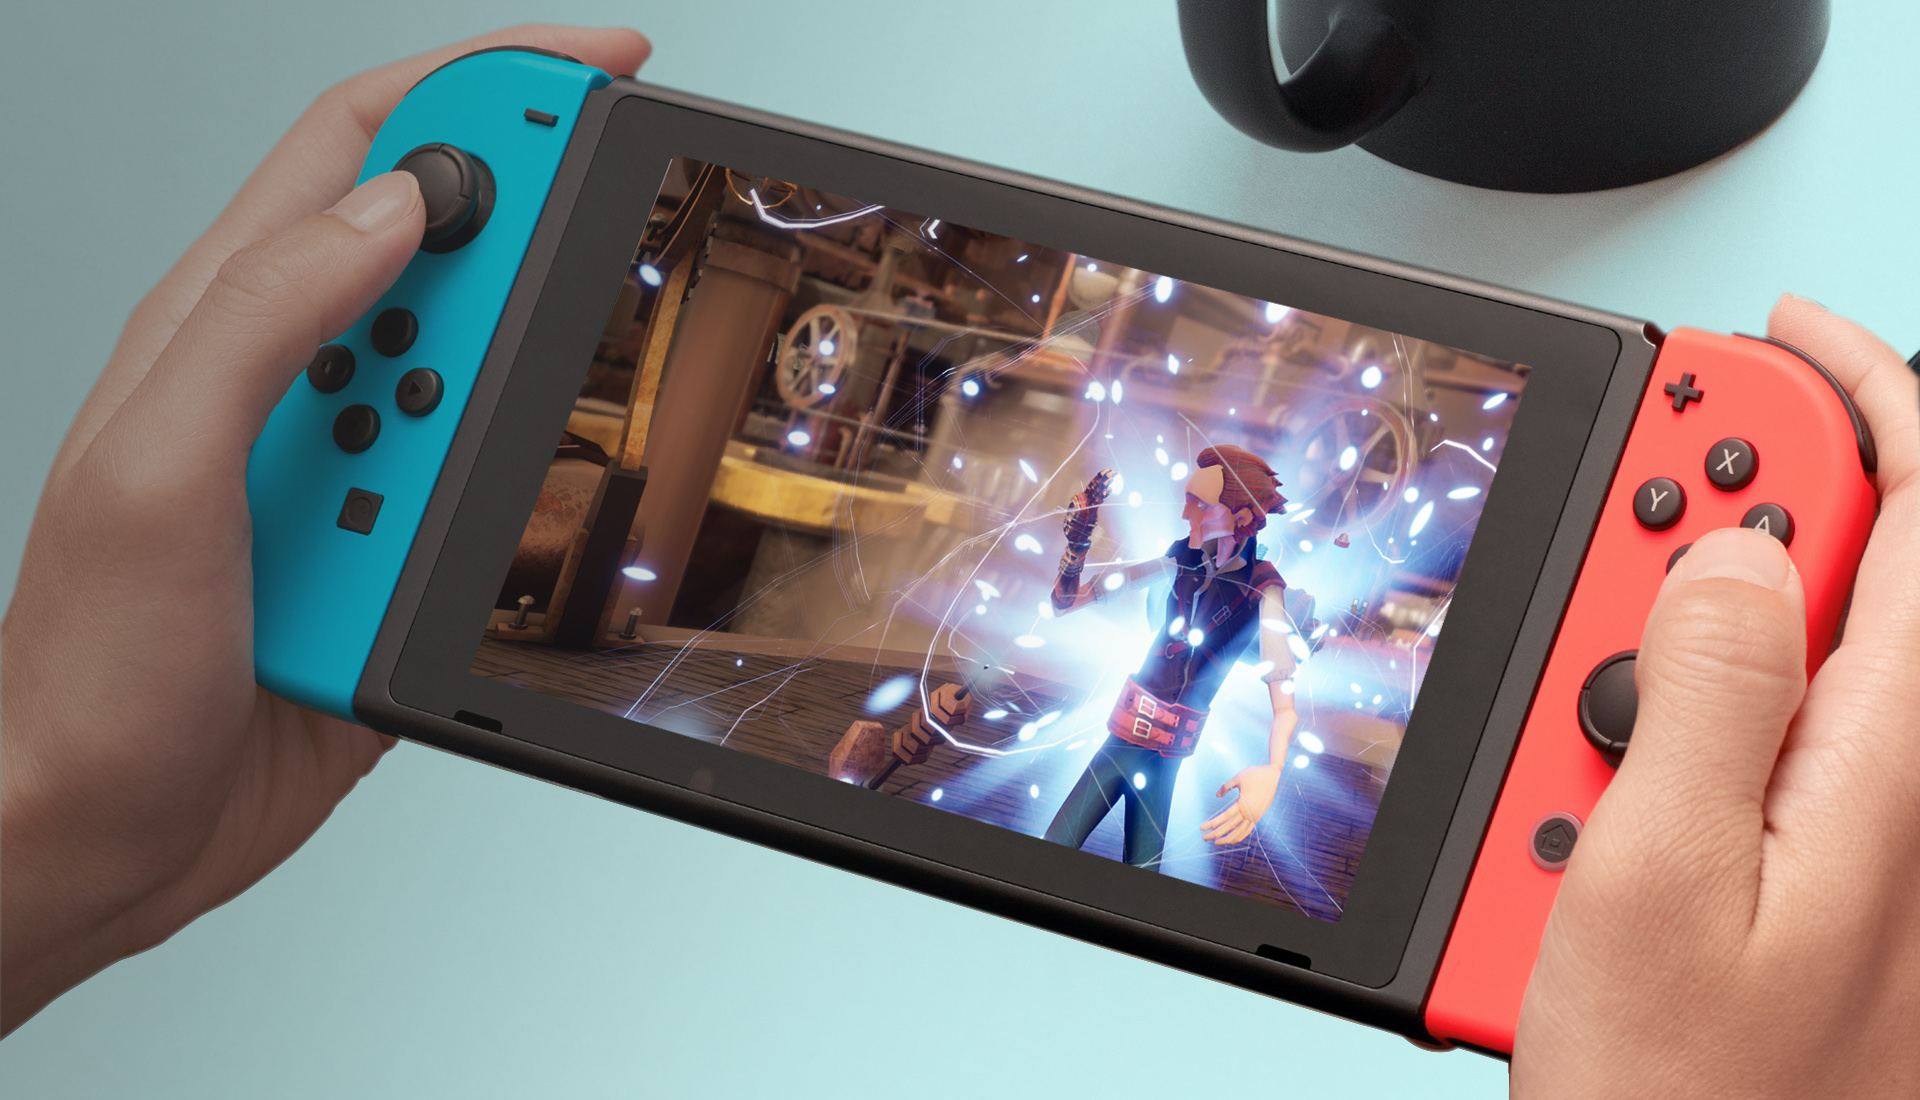 Utalca Professor Will Develop Video Game for Nintendo Switch